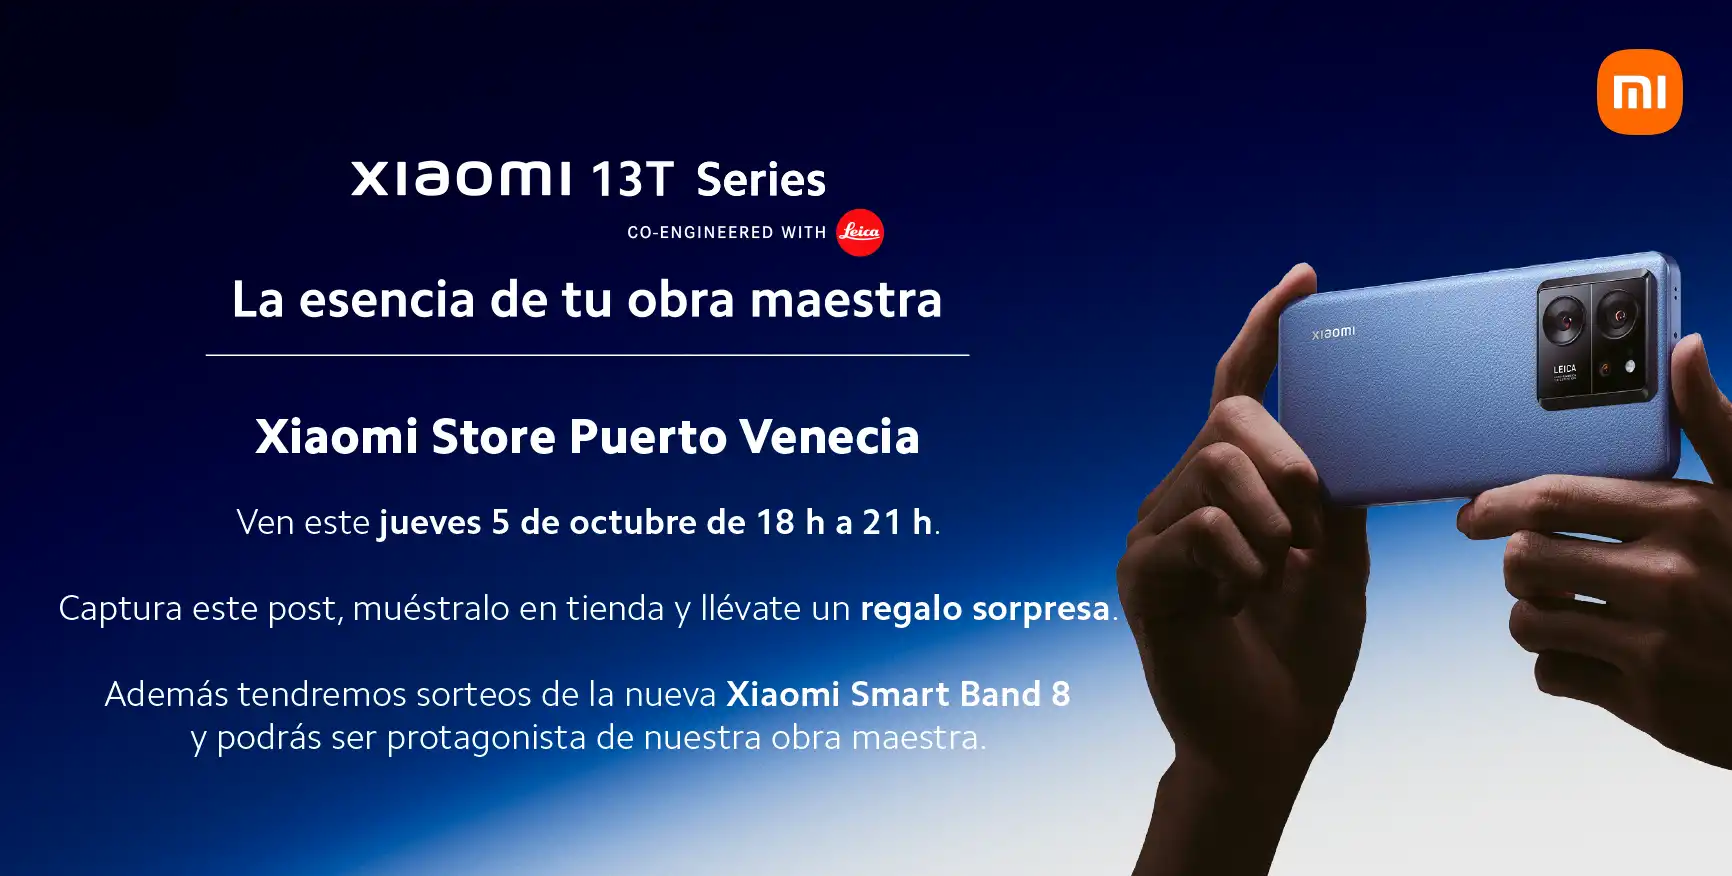 Xiaomi 13T Series  La esencia de tu obra maestra